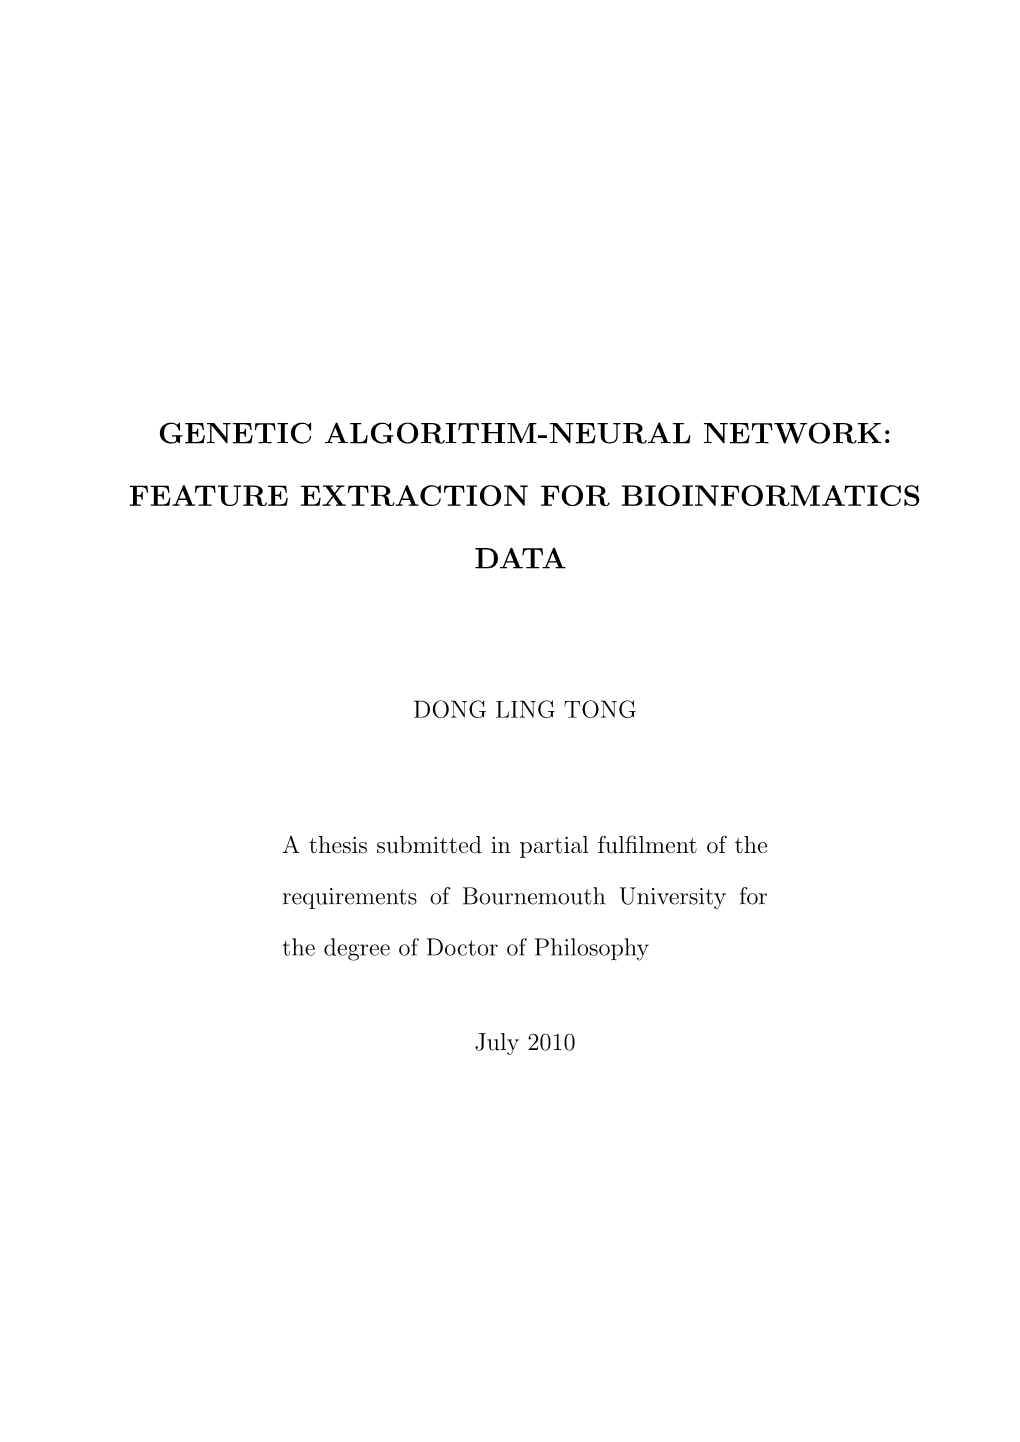 Genetic Algorithm-Neural Network: Feature